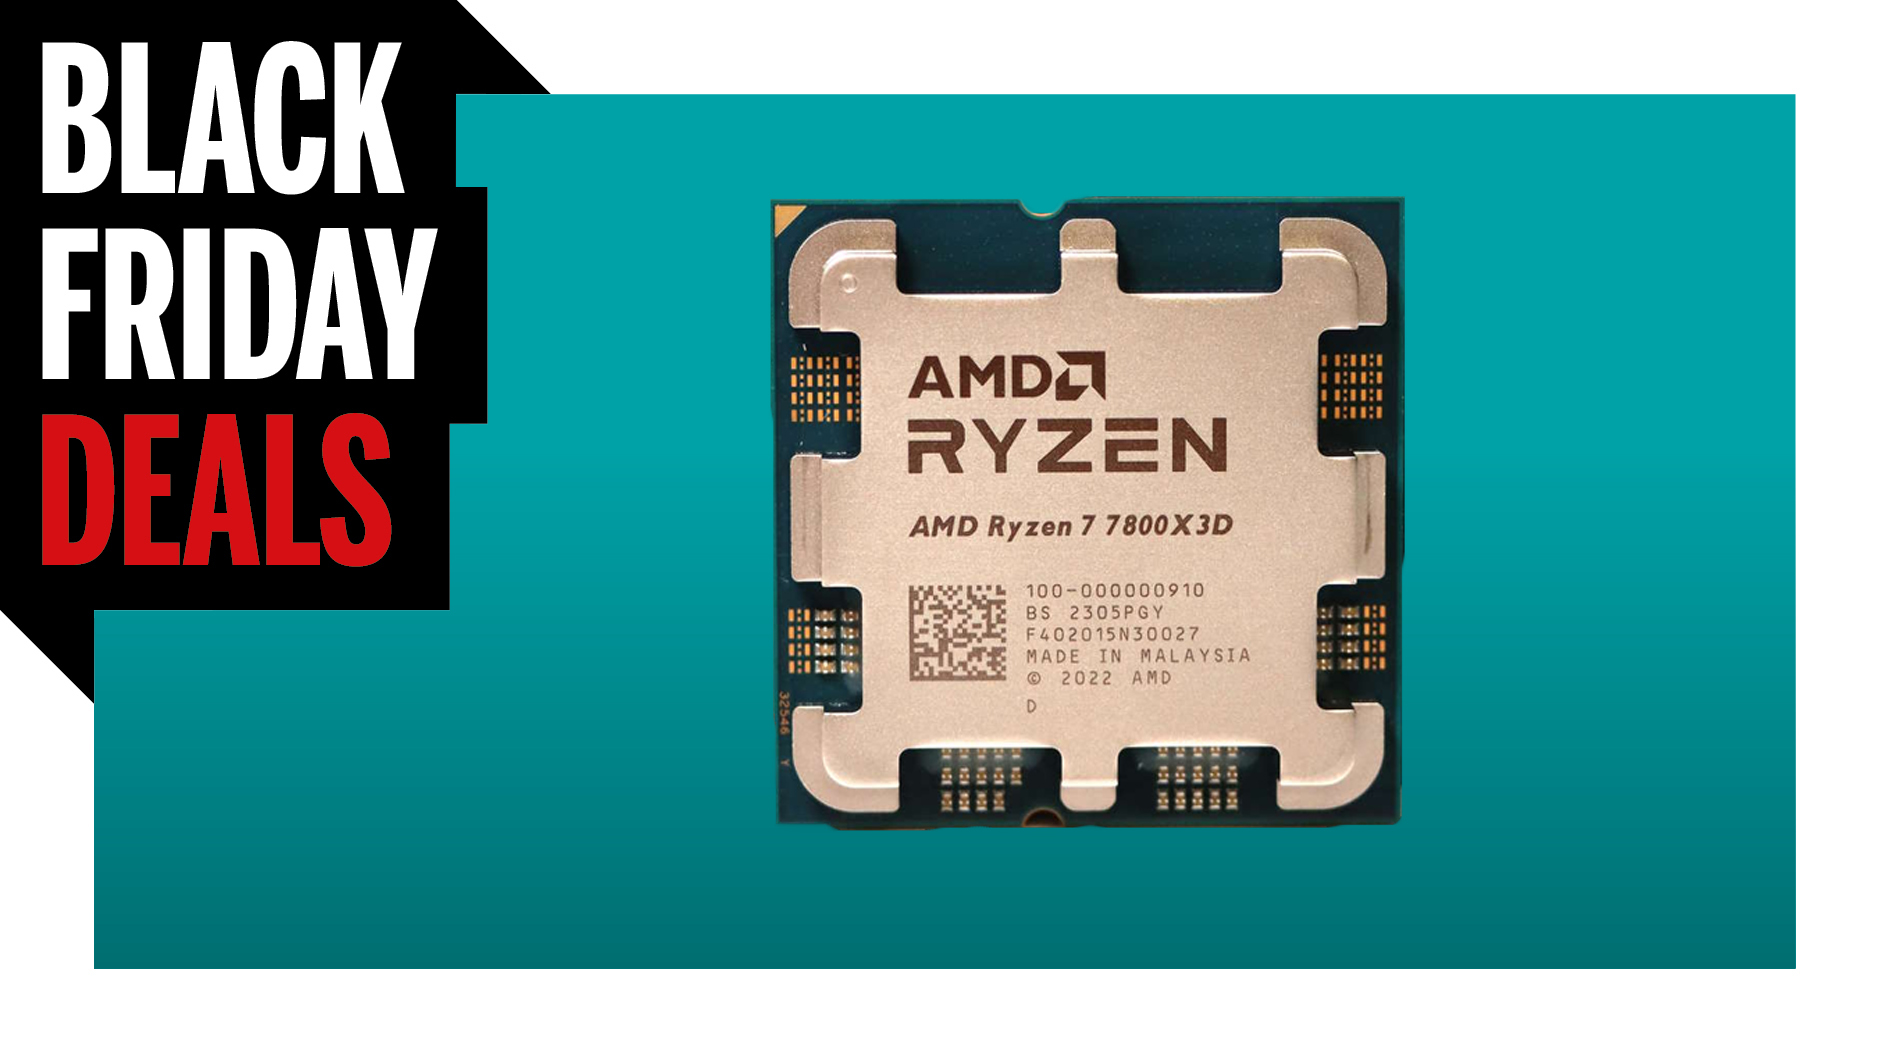 AMD RYZEN 7 5800X 3D DESKTOP PROCESSOR -, Supreme IT Mall